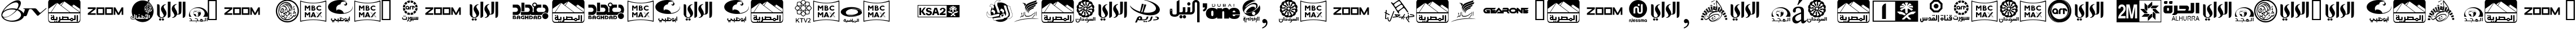 Пример написания шрифтом Arab TV logos текста на испанском